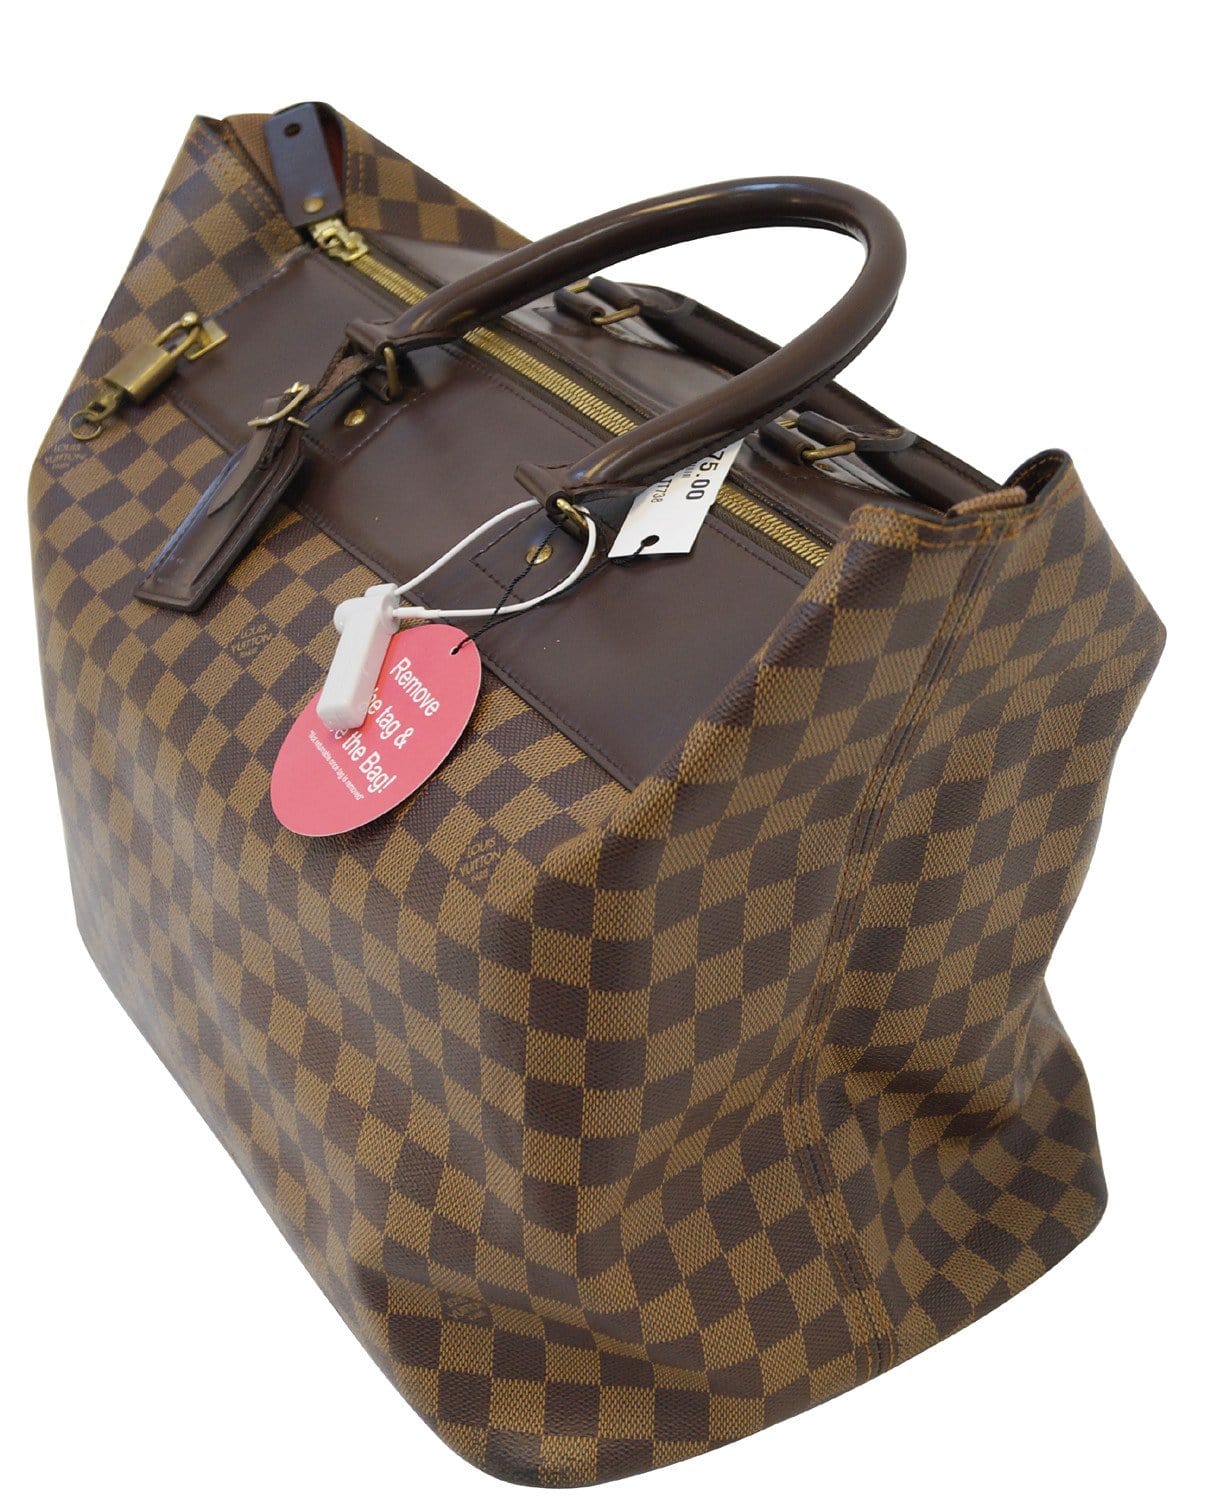 Louis Vuitton Damier Ebene Greenwich PM Travel Bag N41165